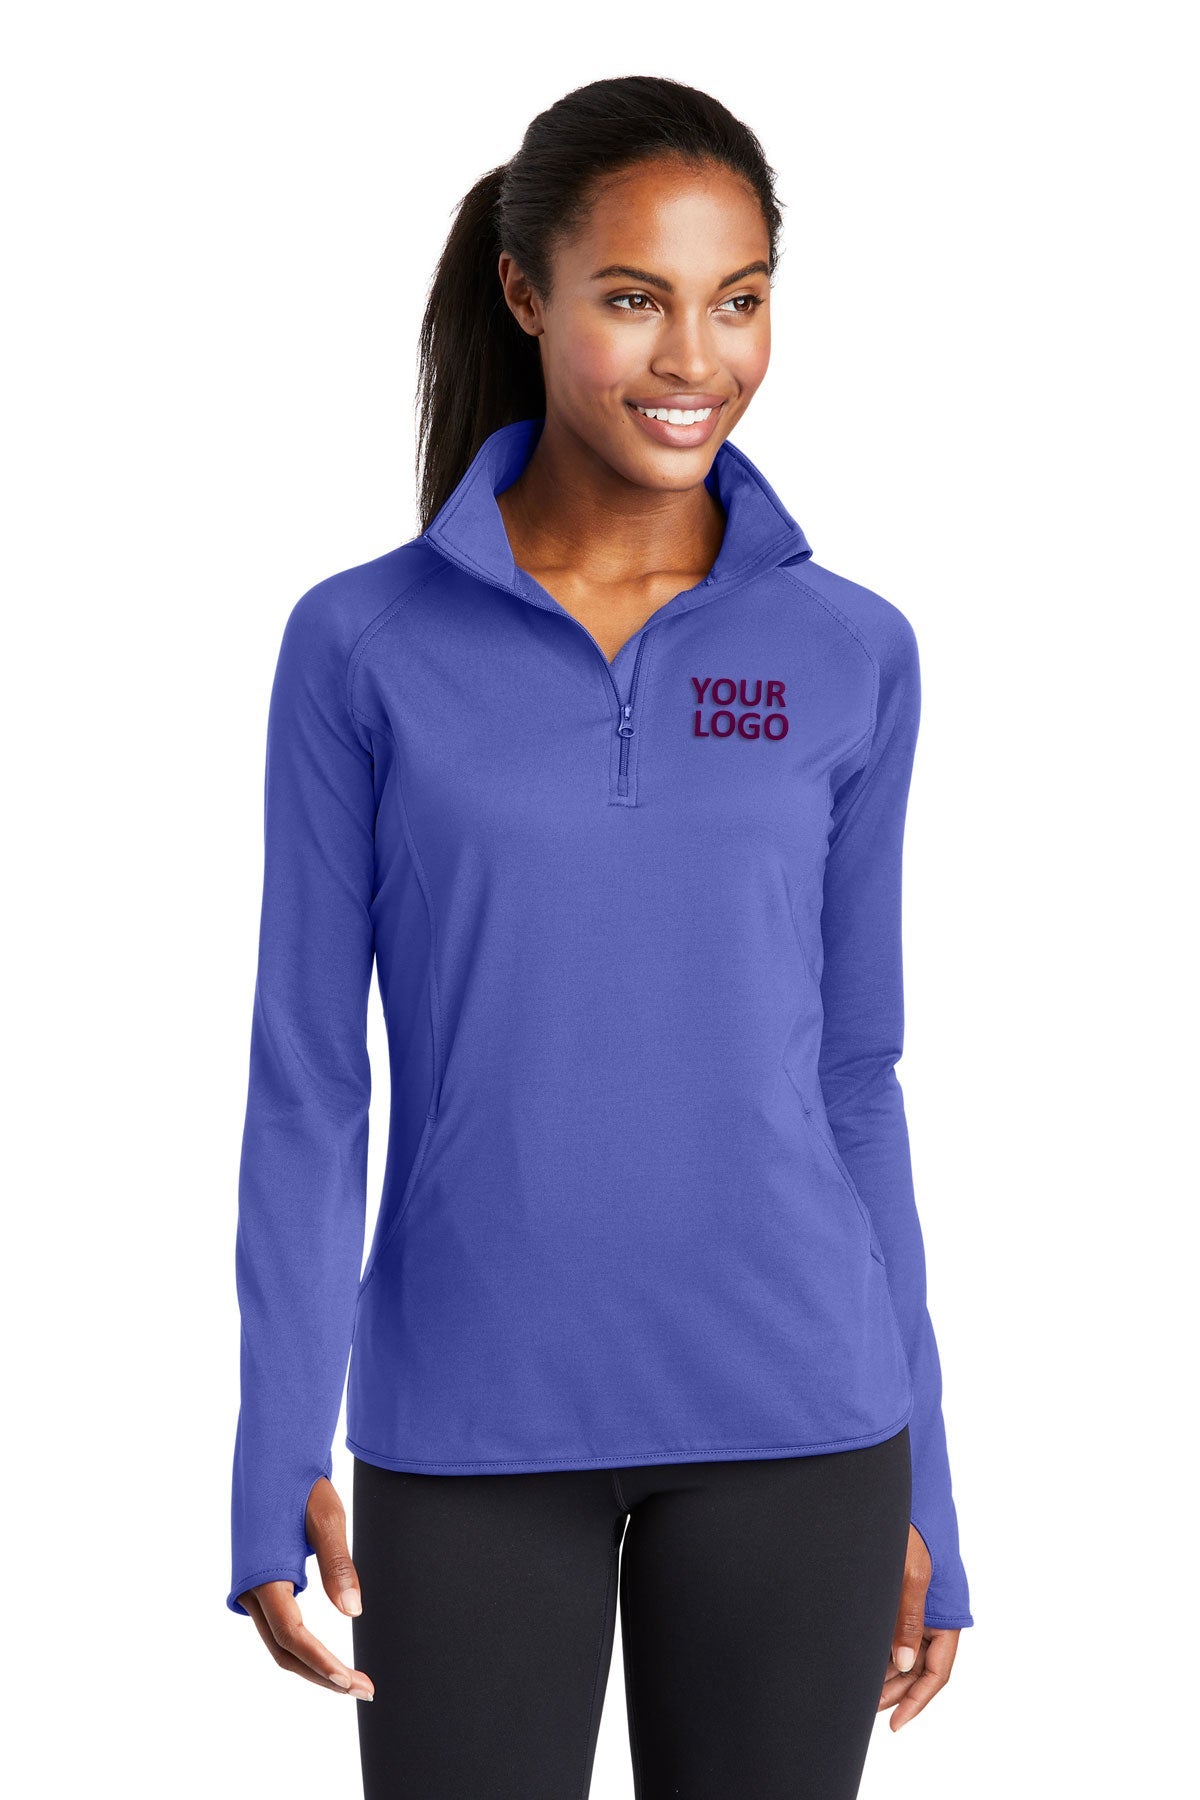 Sport-Tek Iris Purple LST850 company sweatshirts embroidered